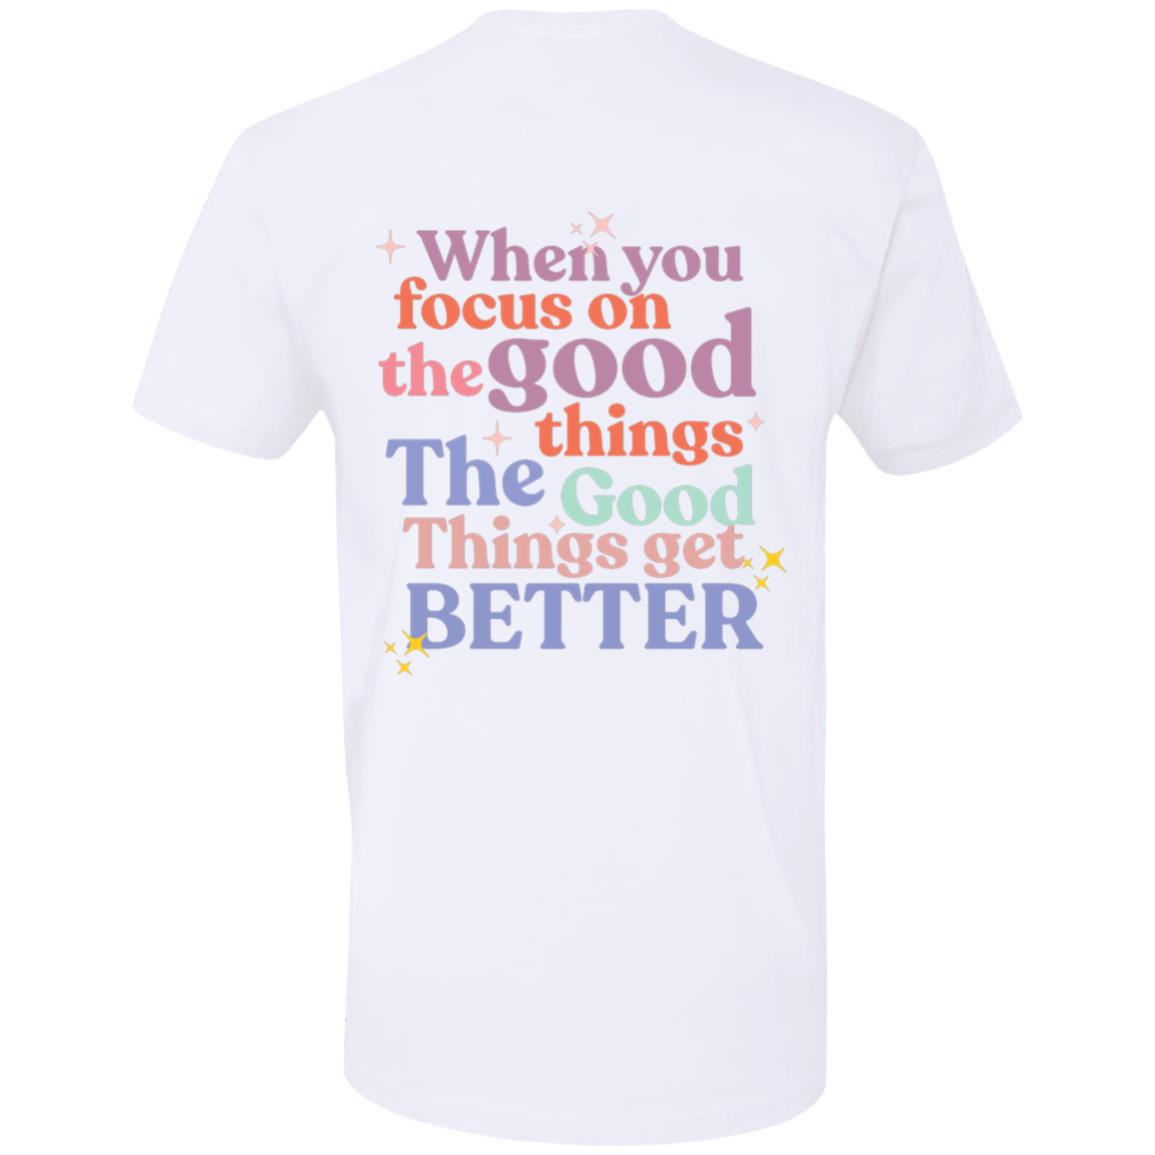 Focus on the Good T-shirt